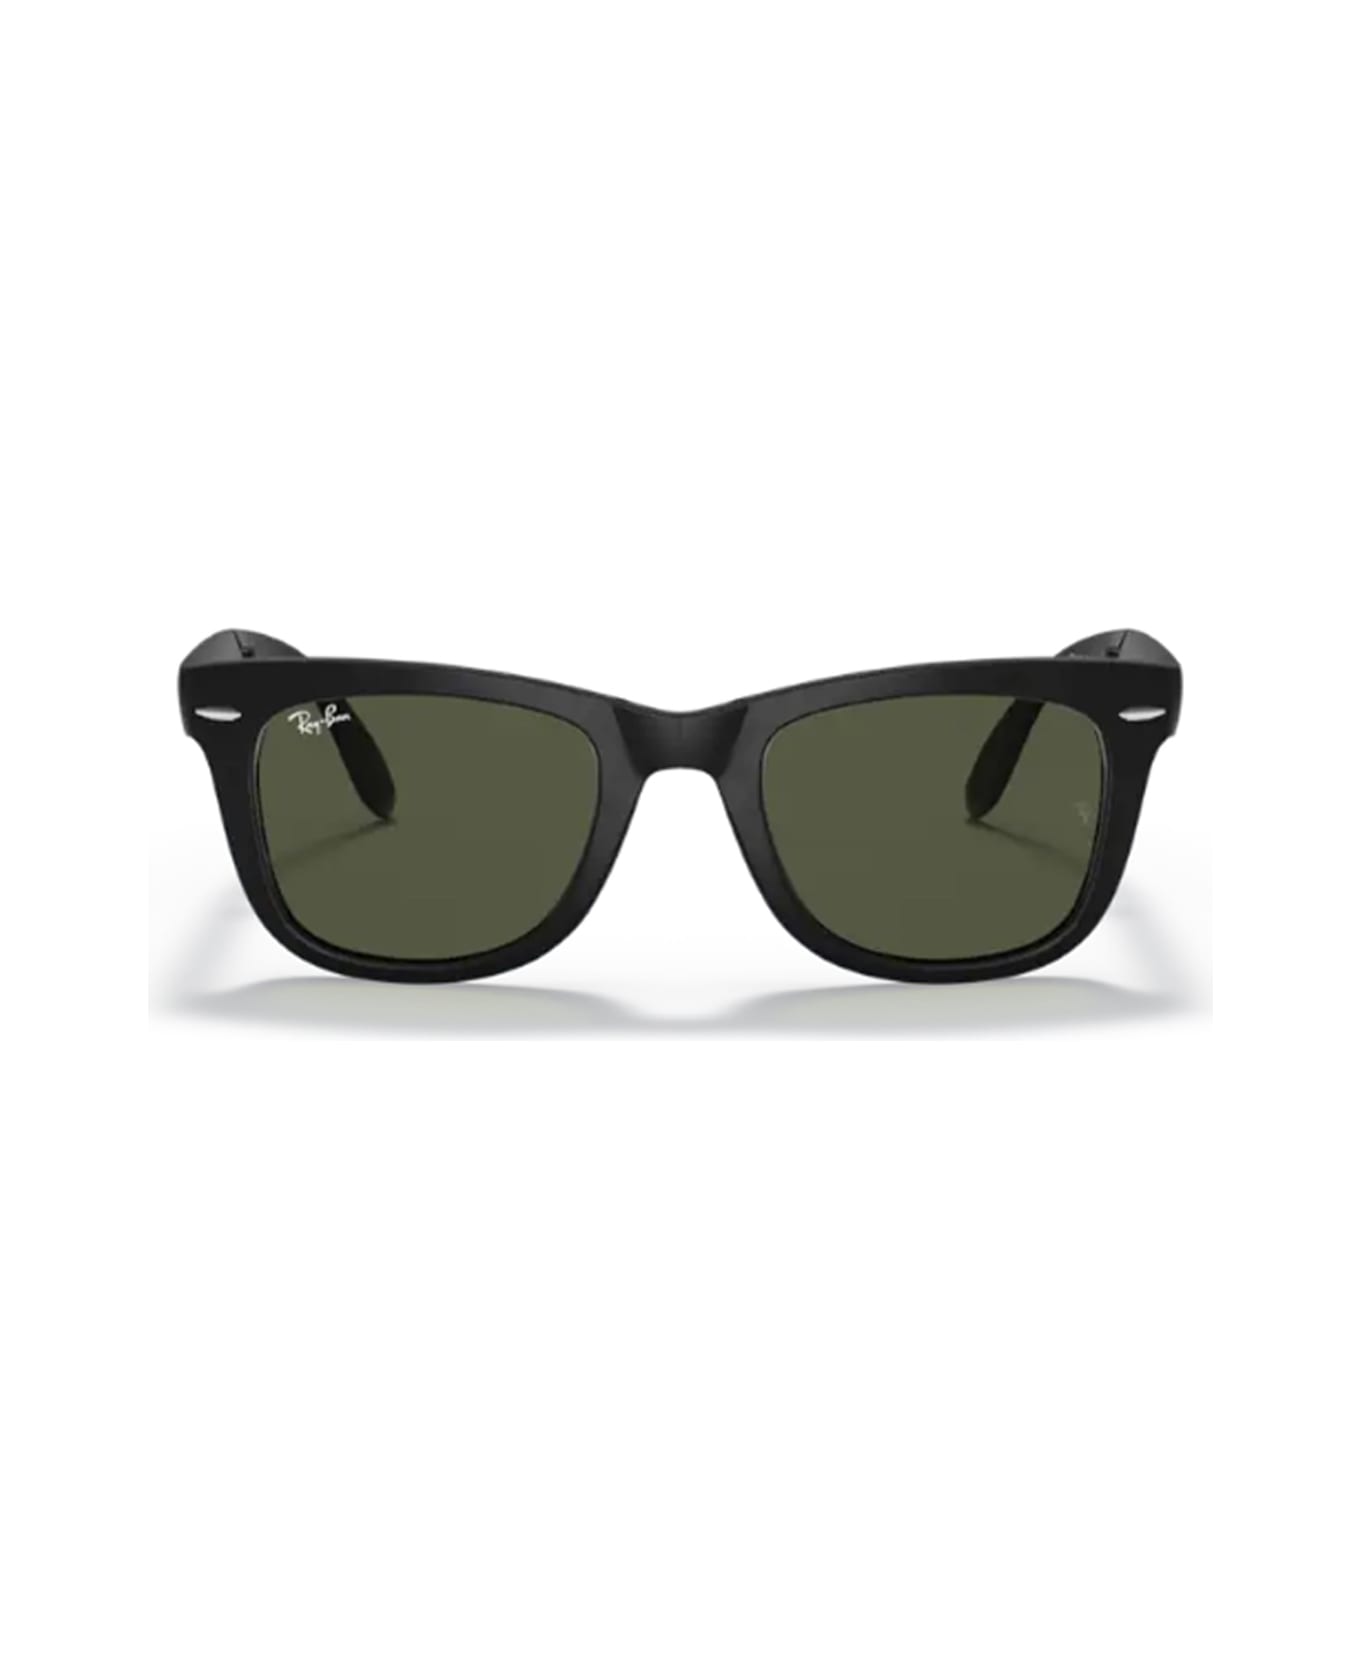 Ray-Ban Folding Wayfarer Rb4105 Sunglasses - Nero サングラス